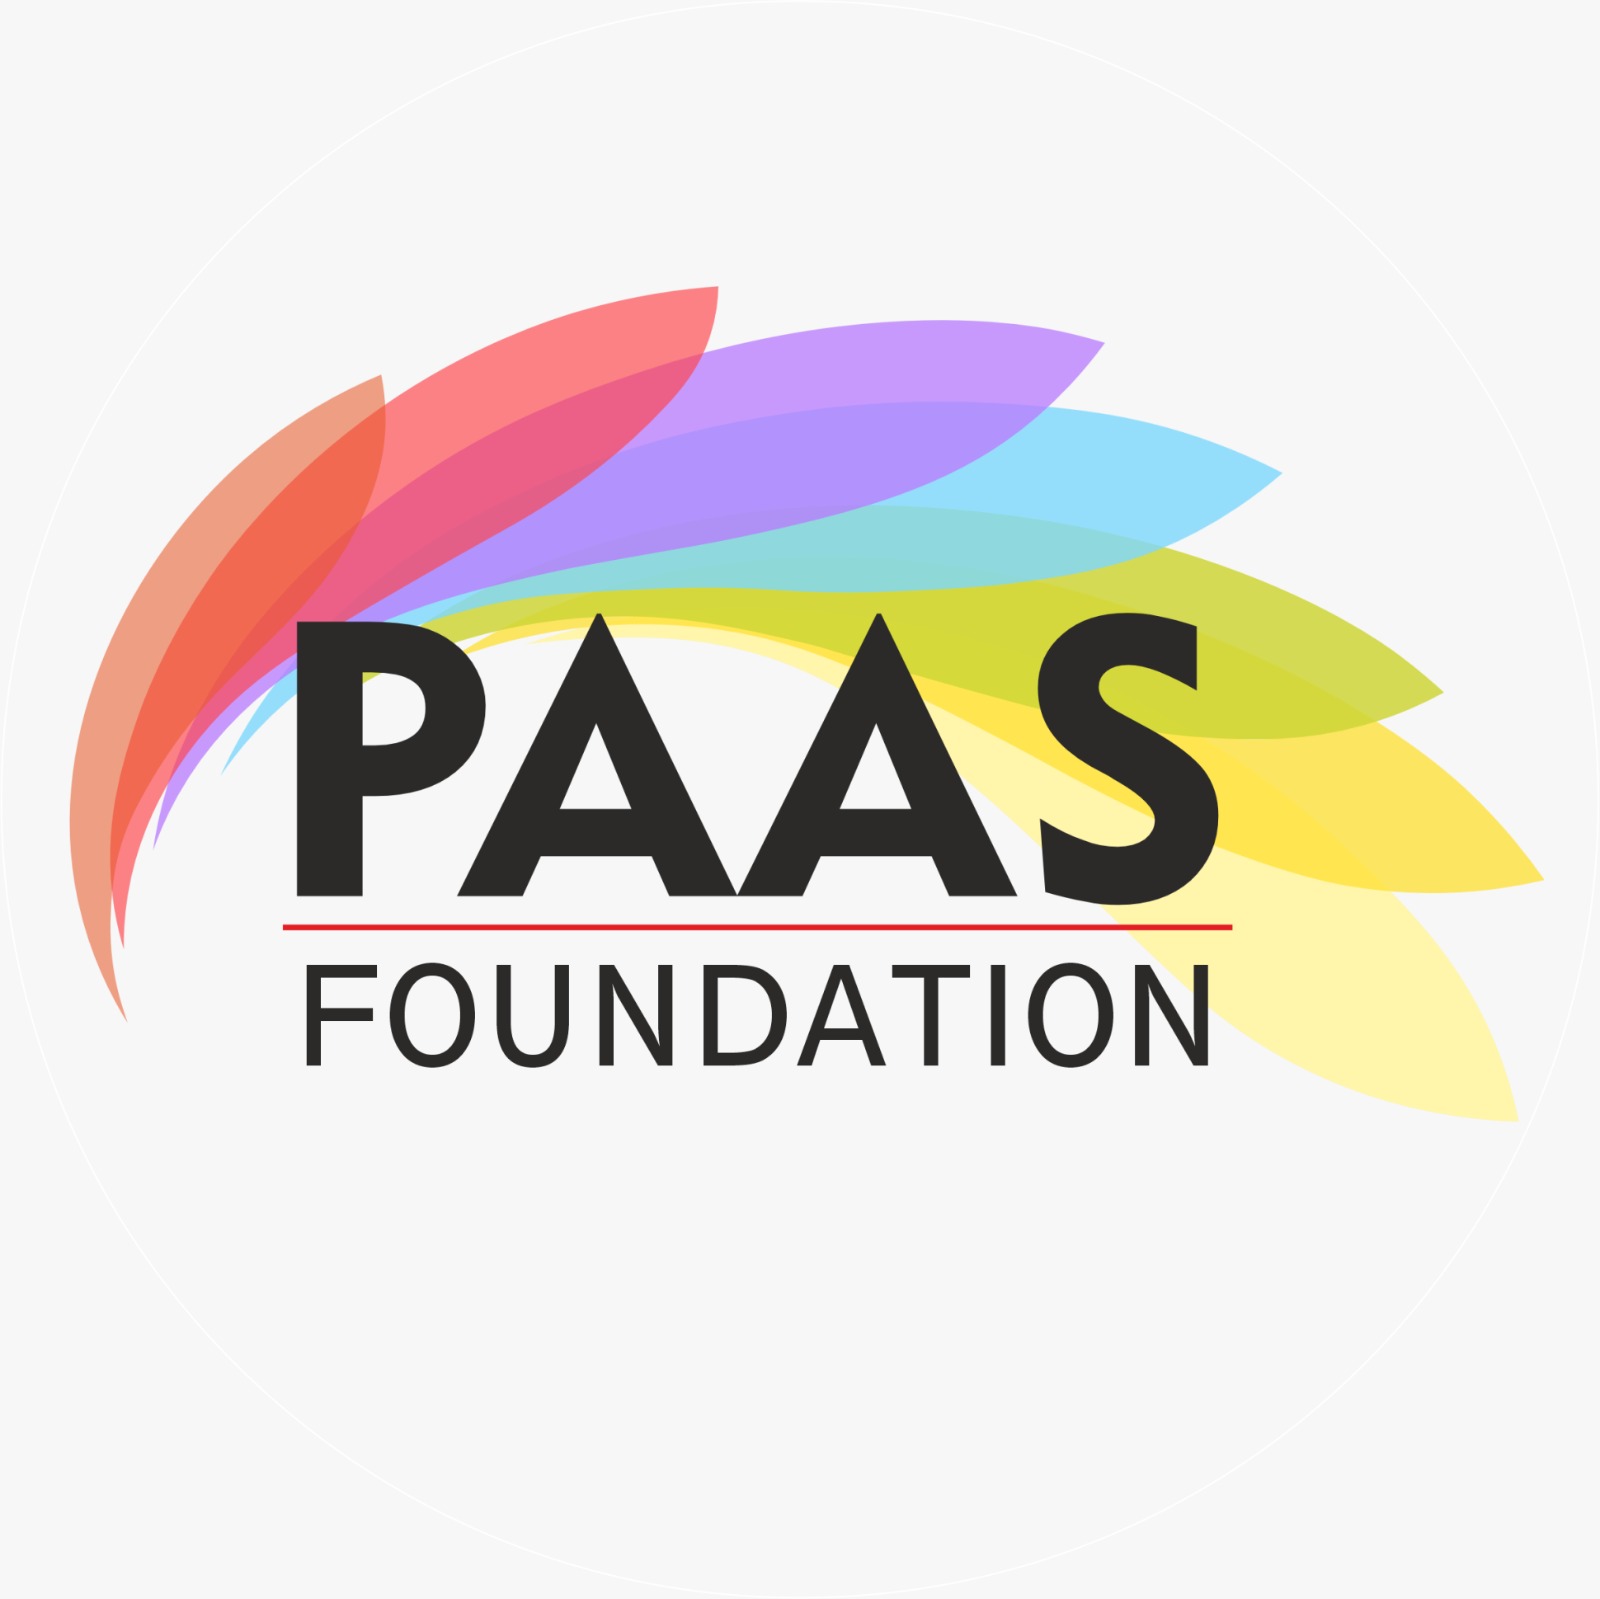 PAAS Foundation